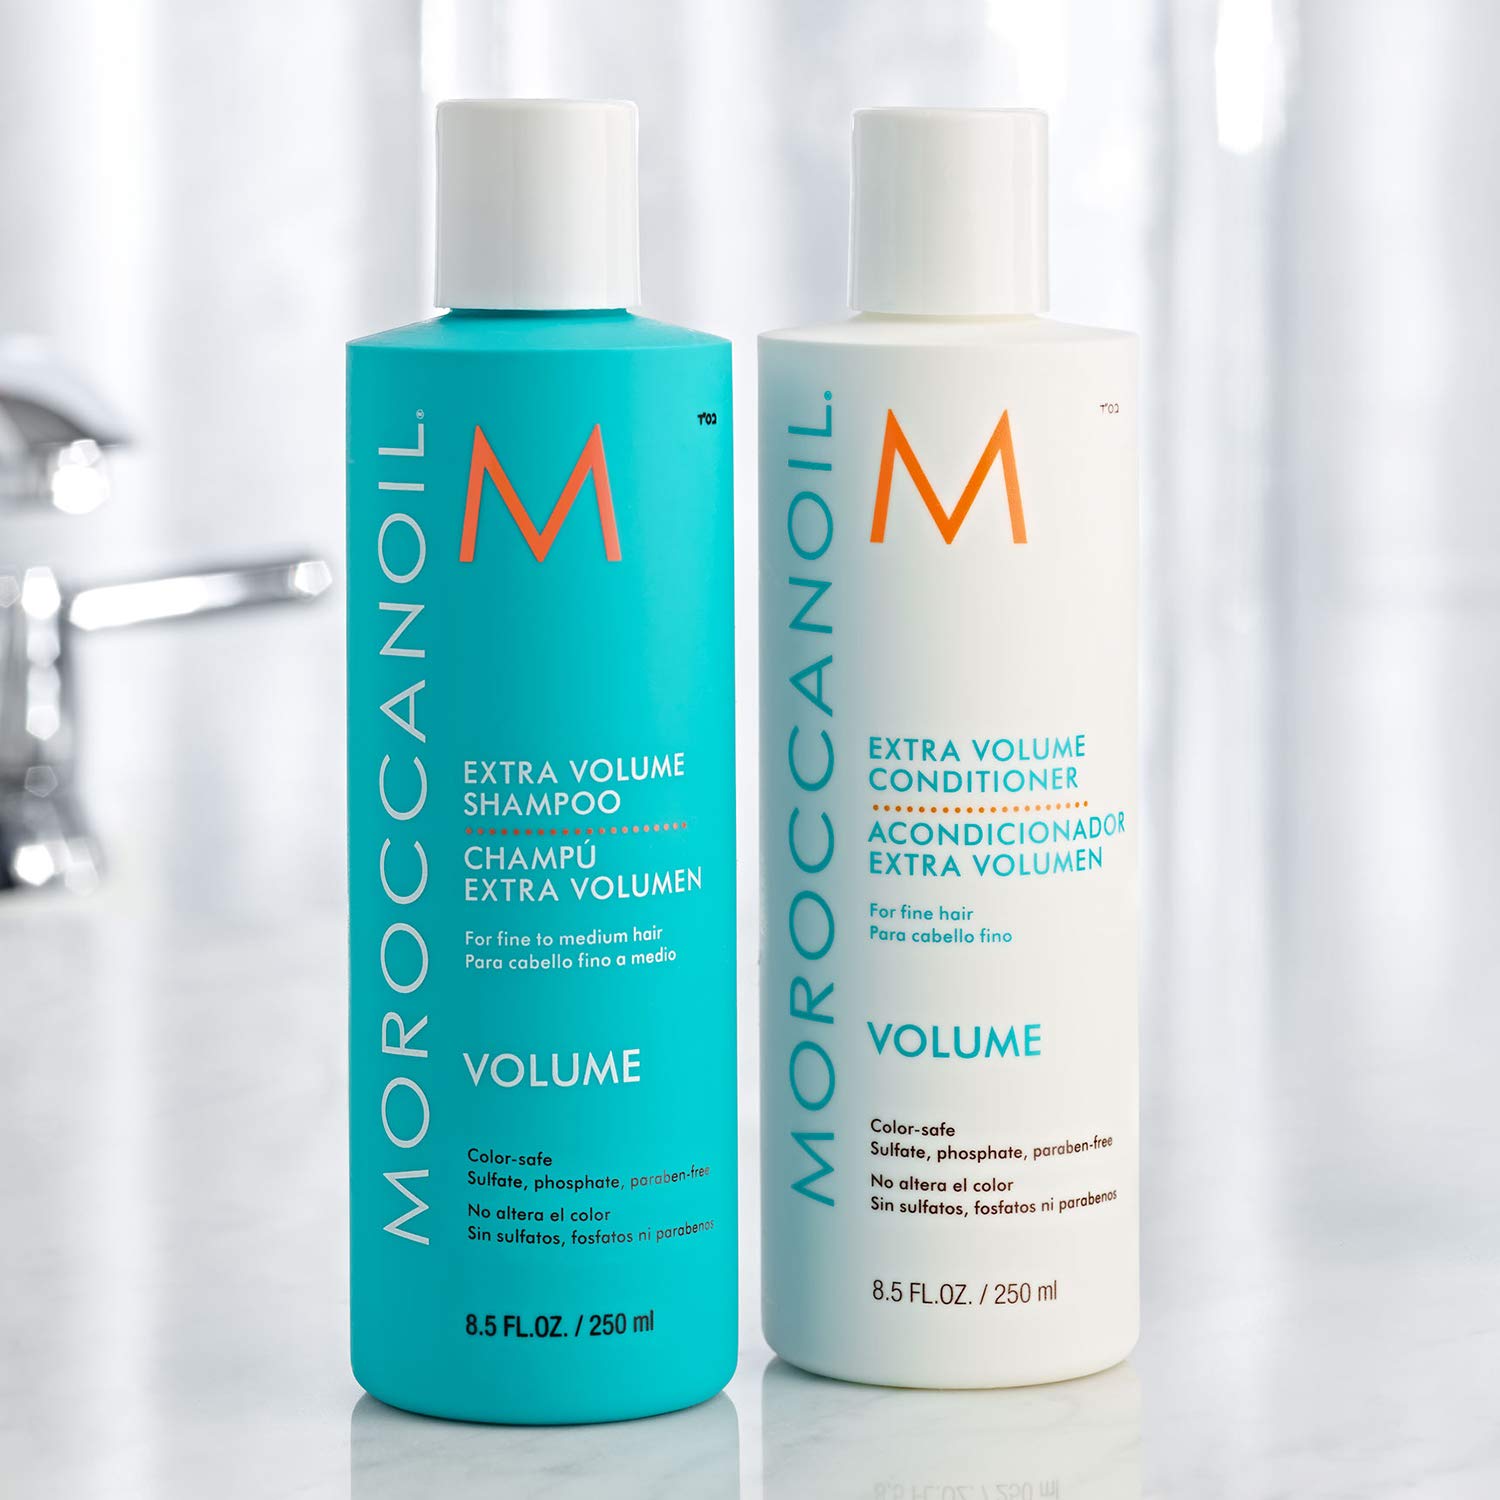 Moroccanoil Extra Volume Shampoo and Conditioner set